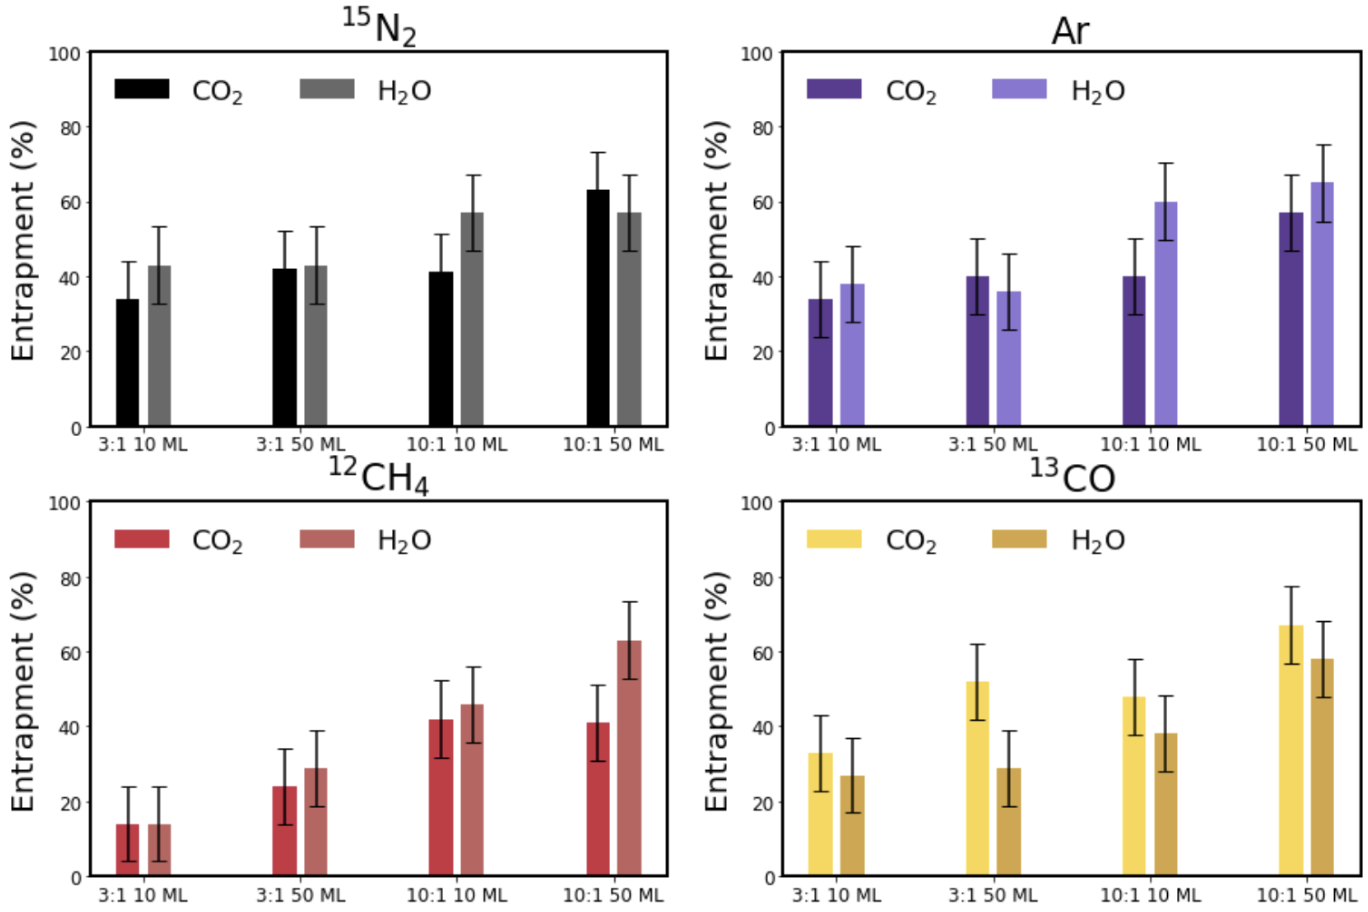 Comparison of H2O and CO2 entrapment for hyper-volatiles